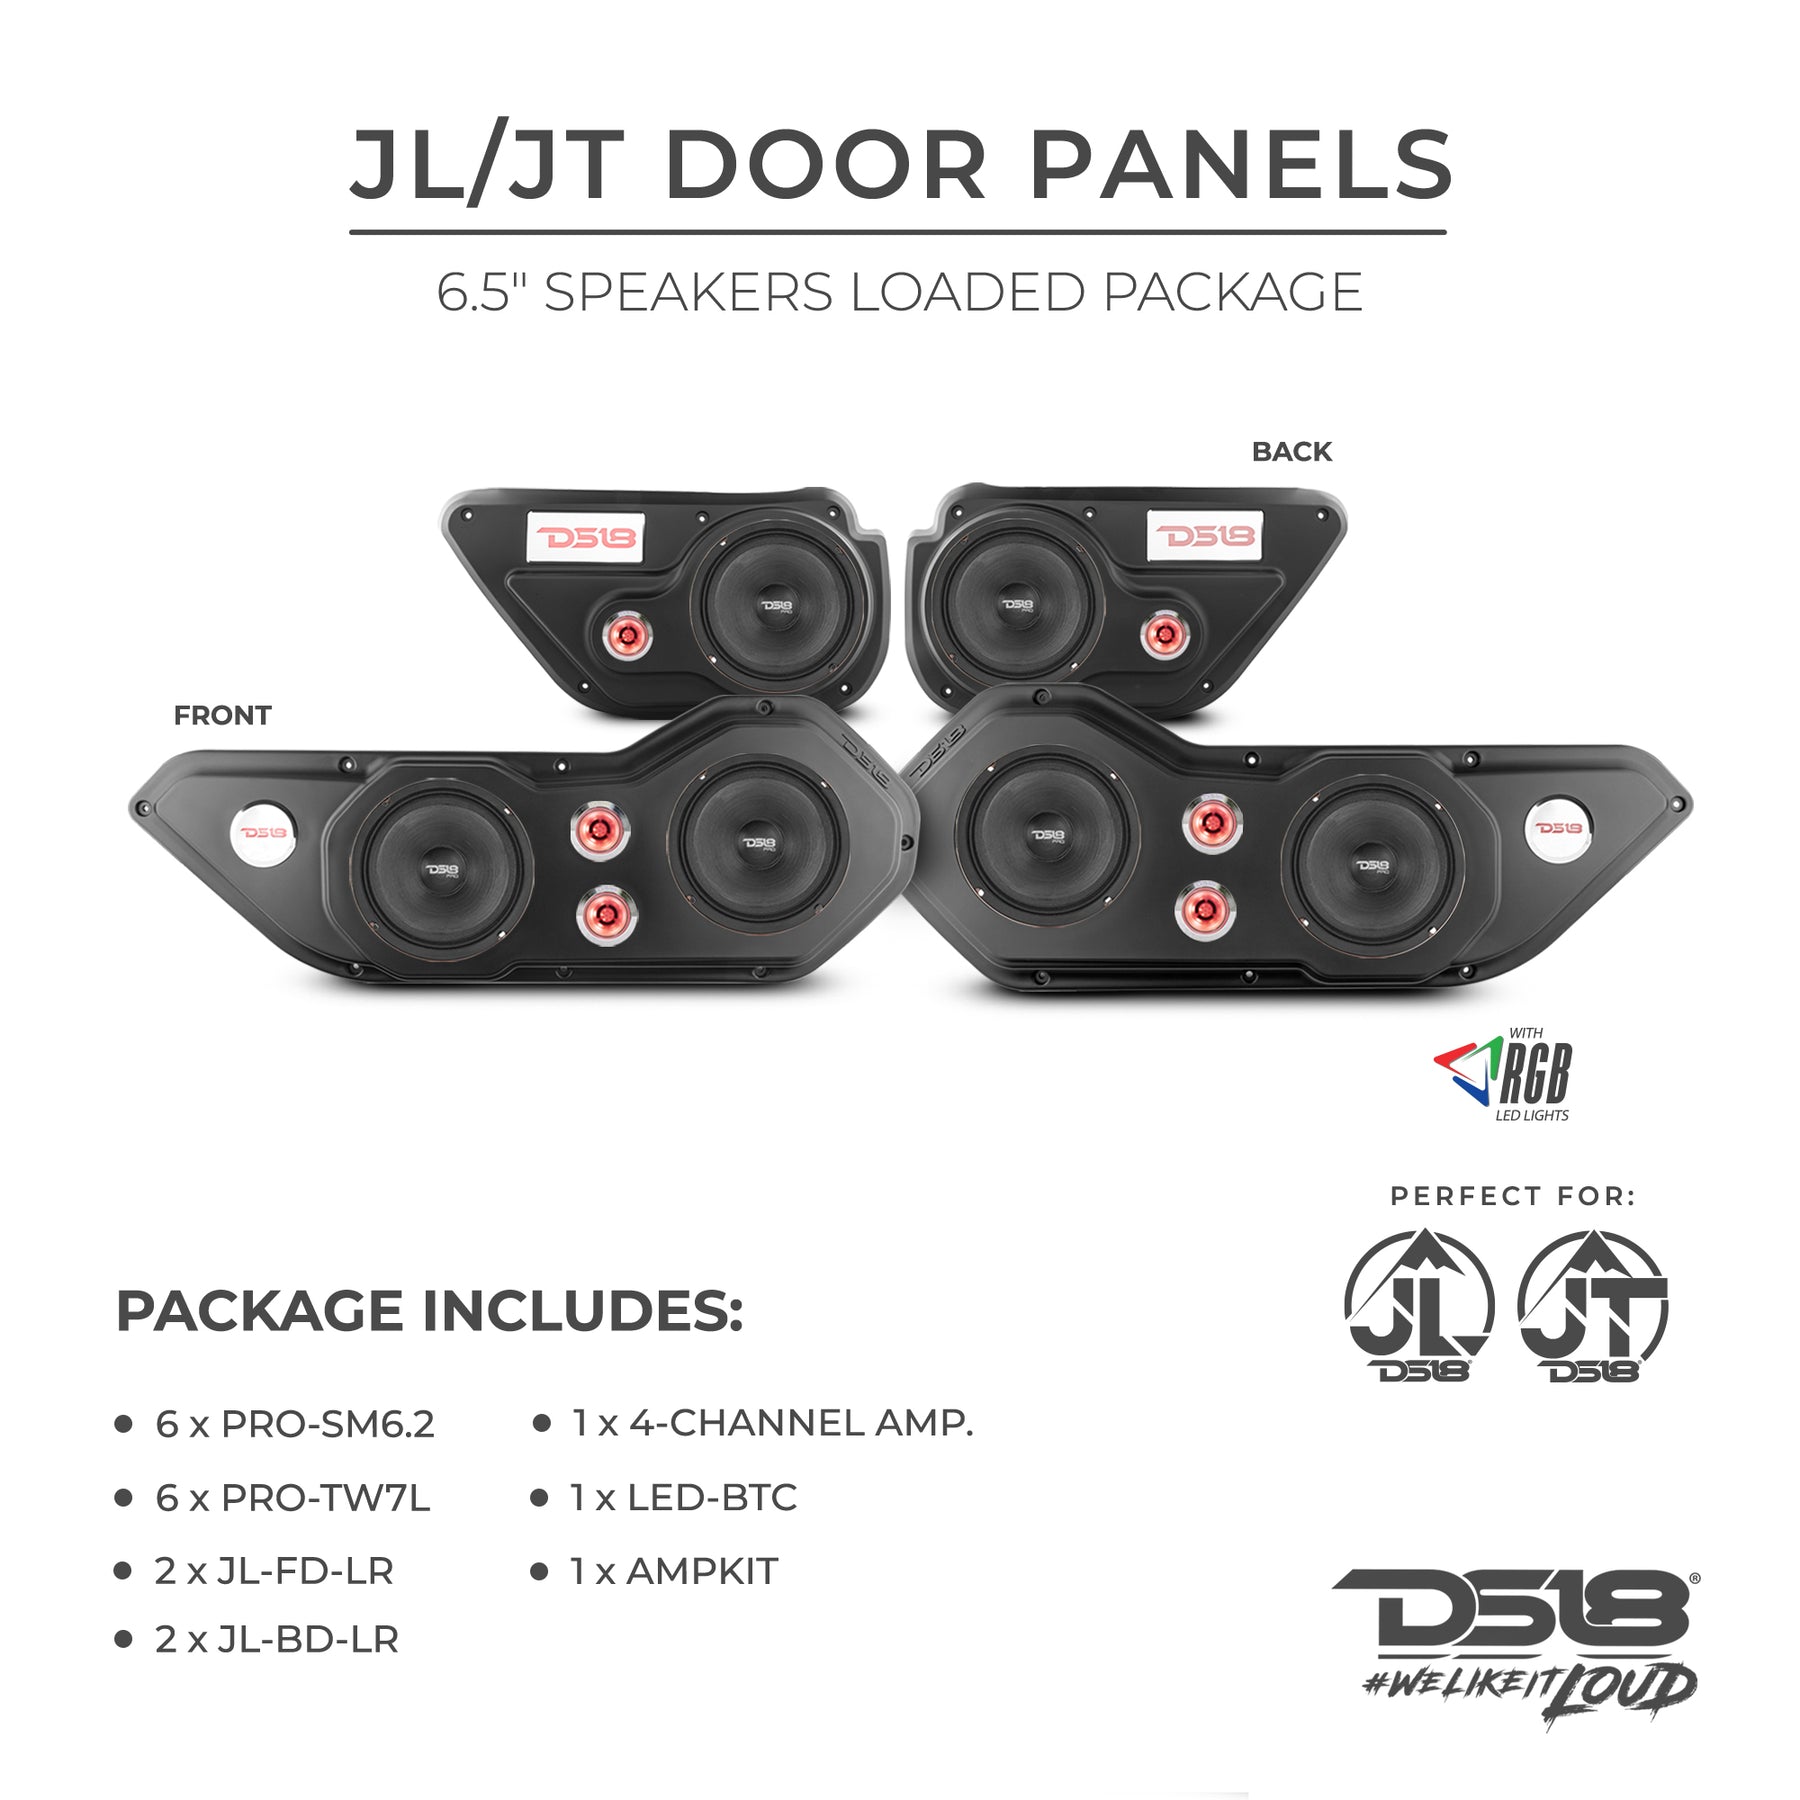 DS18 JL/JT (Gladiator) Door Panels Loaded Combo